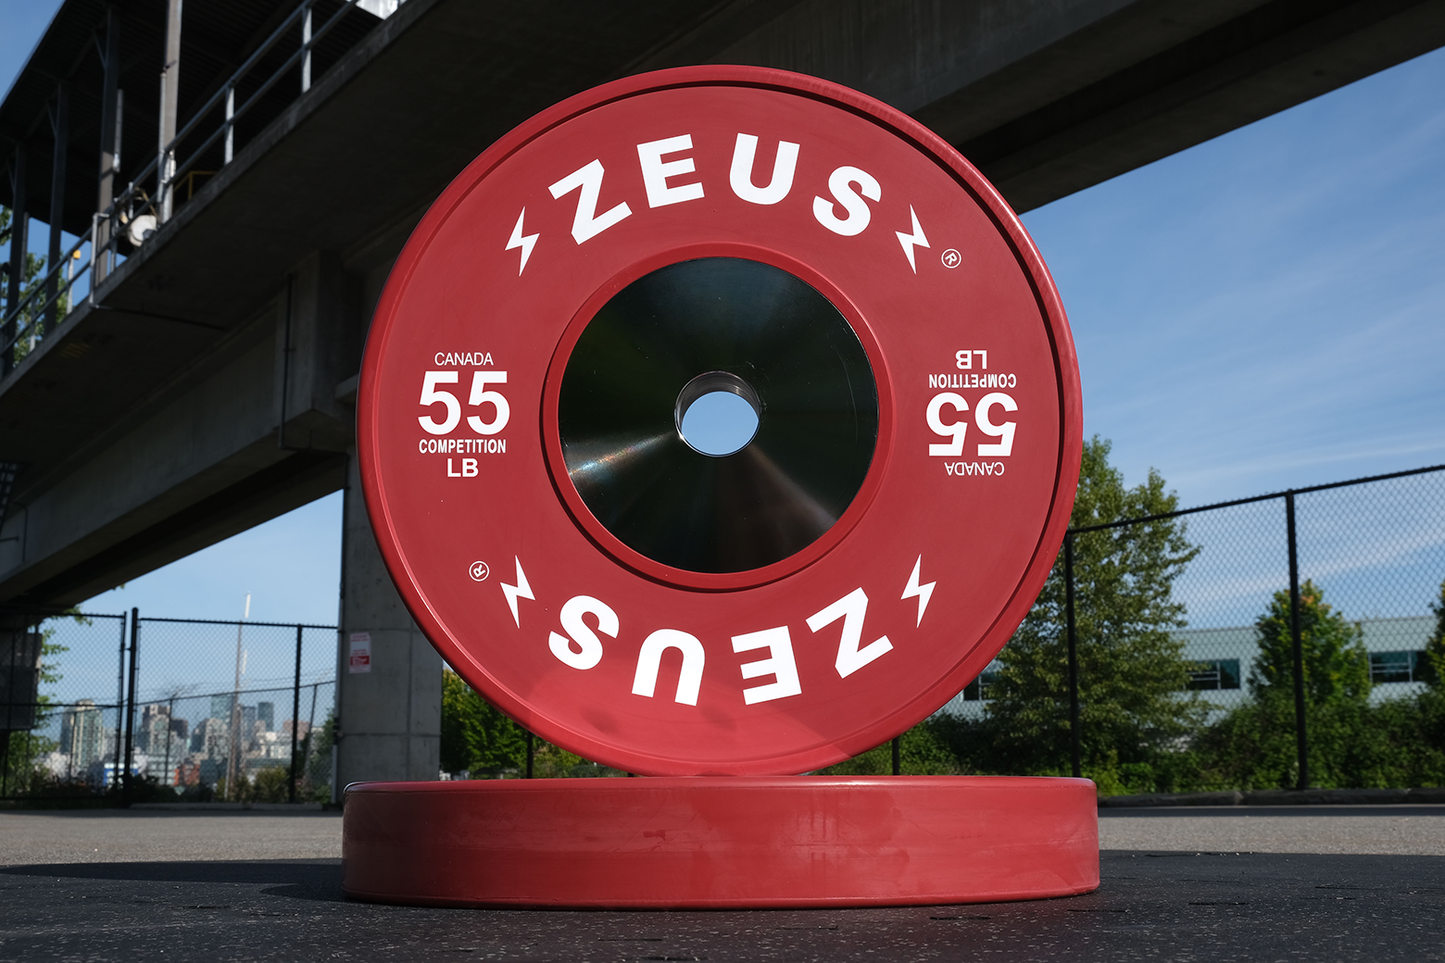 Zeus Competition Bumper Plates - LBS